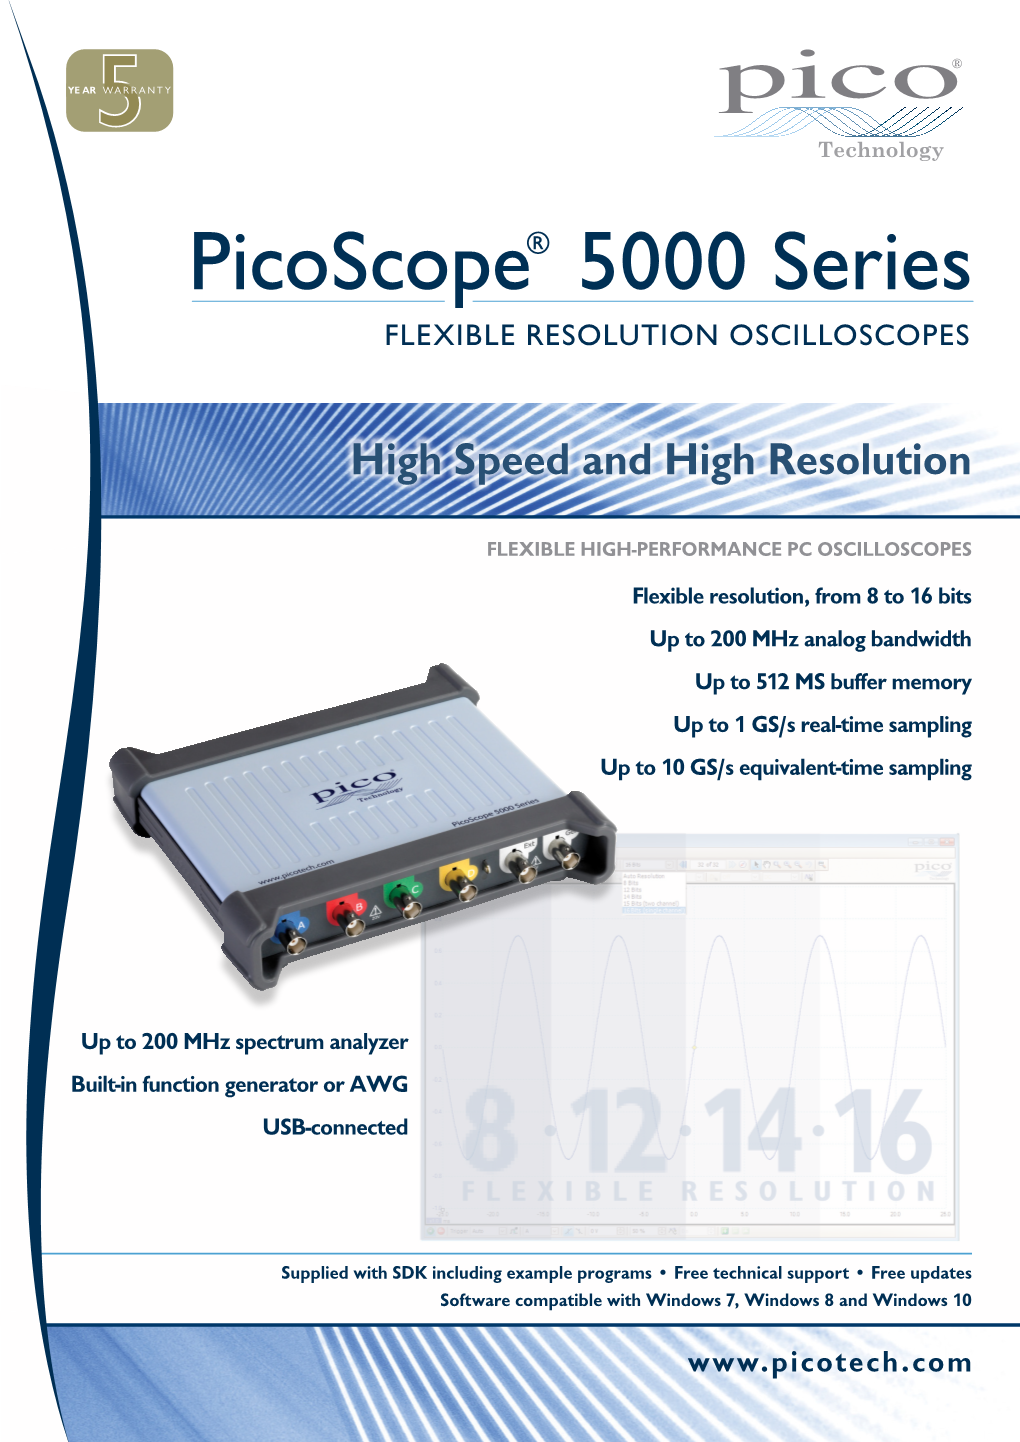 Picoscope 5000 Series Data Sheet